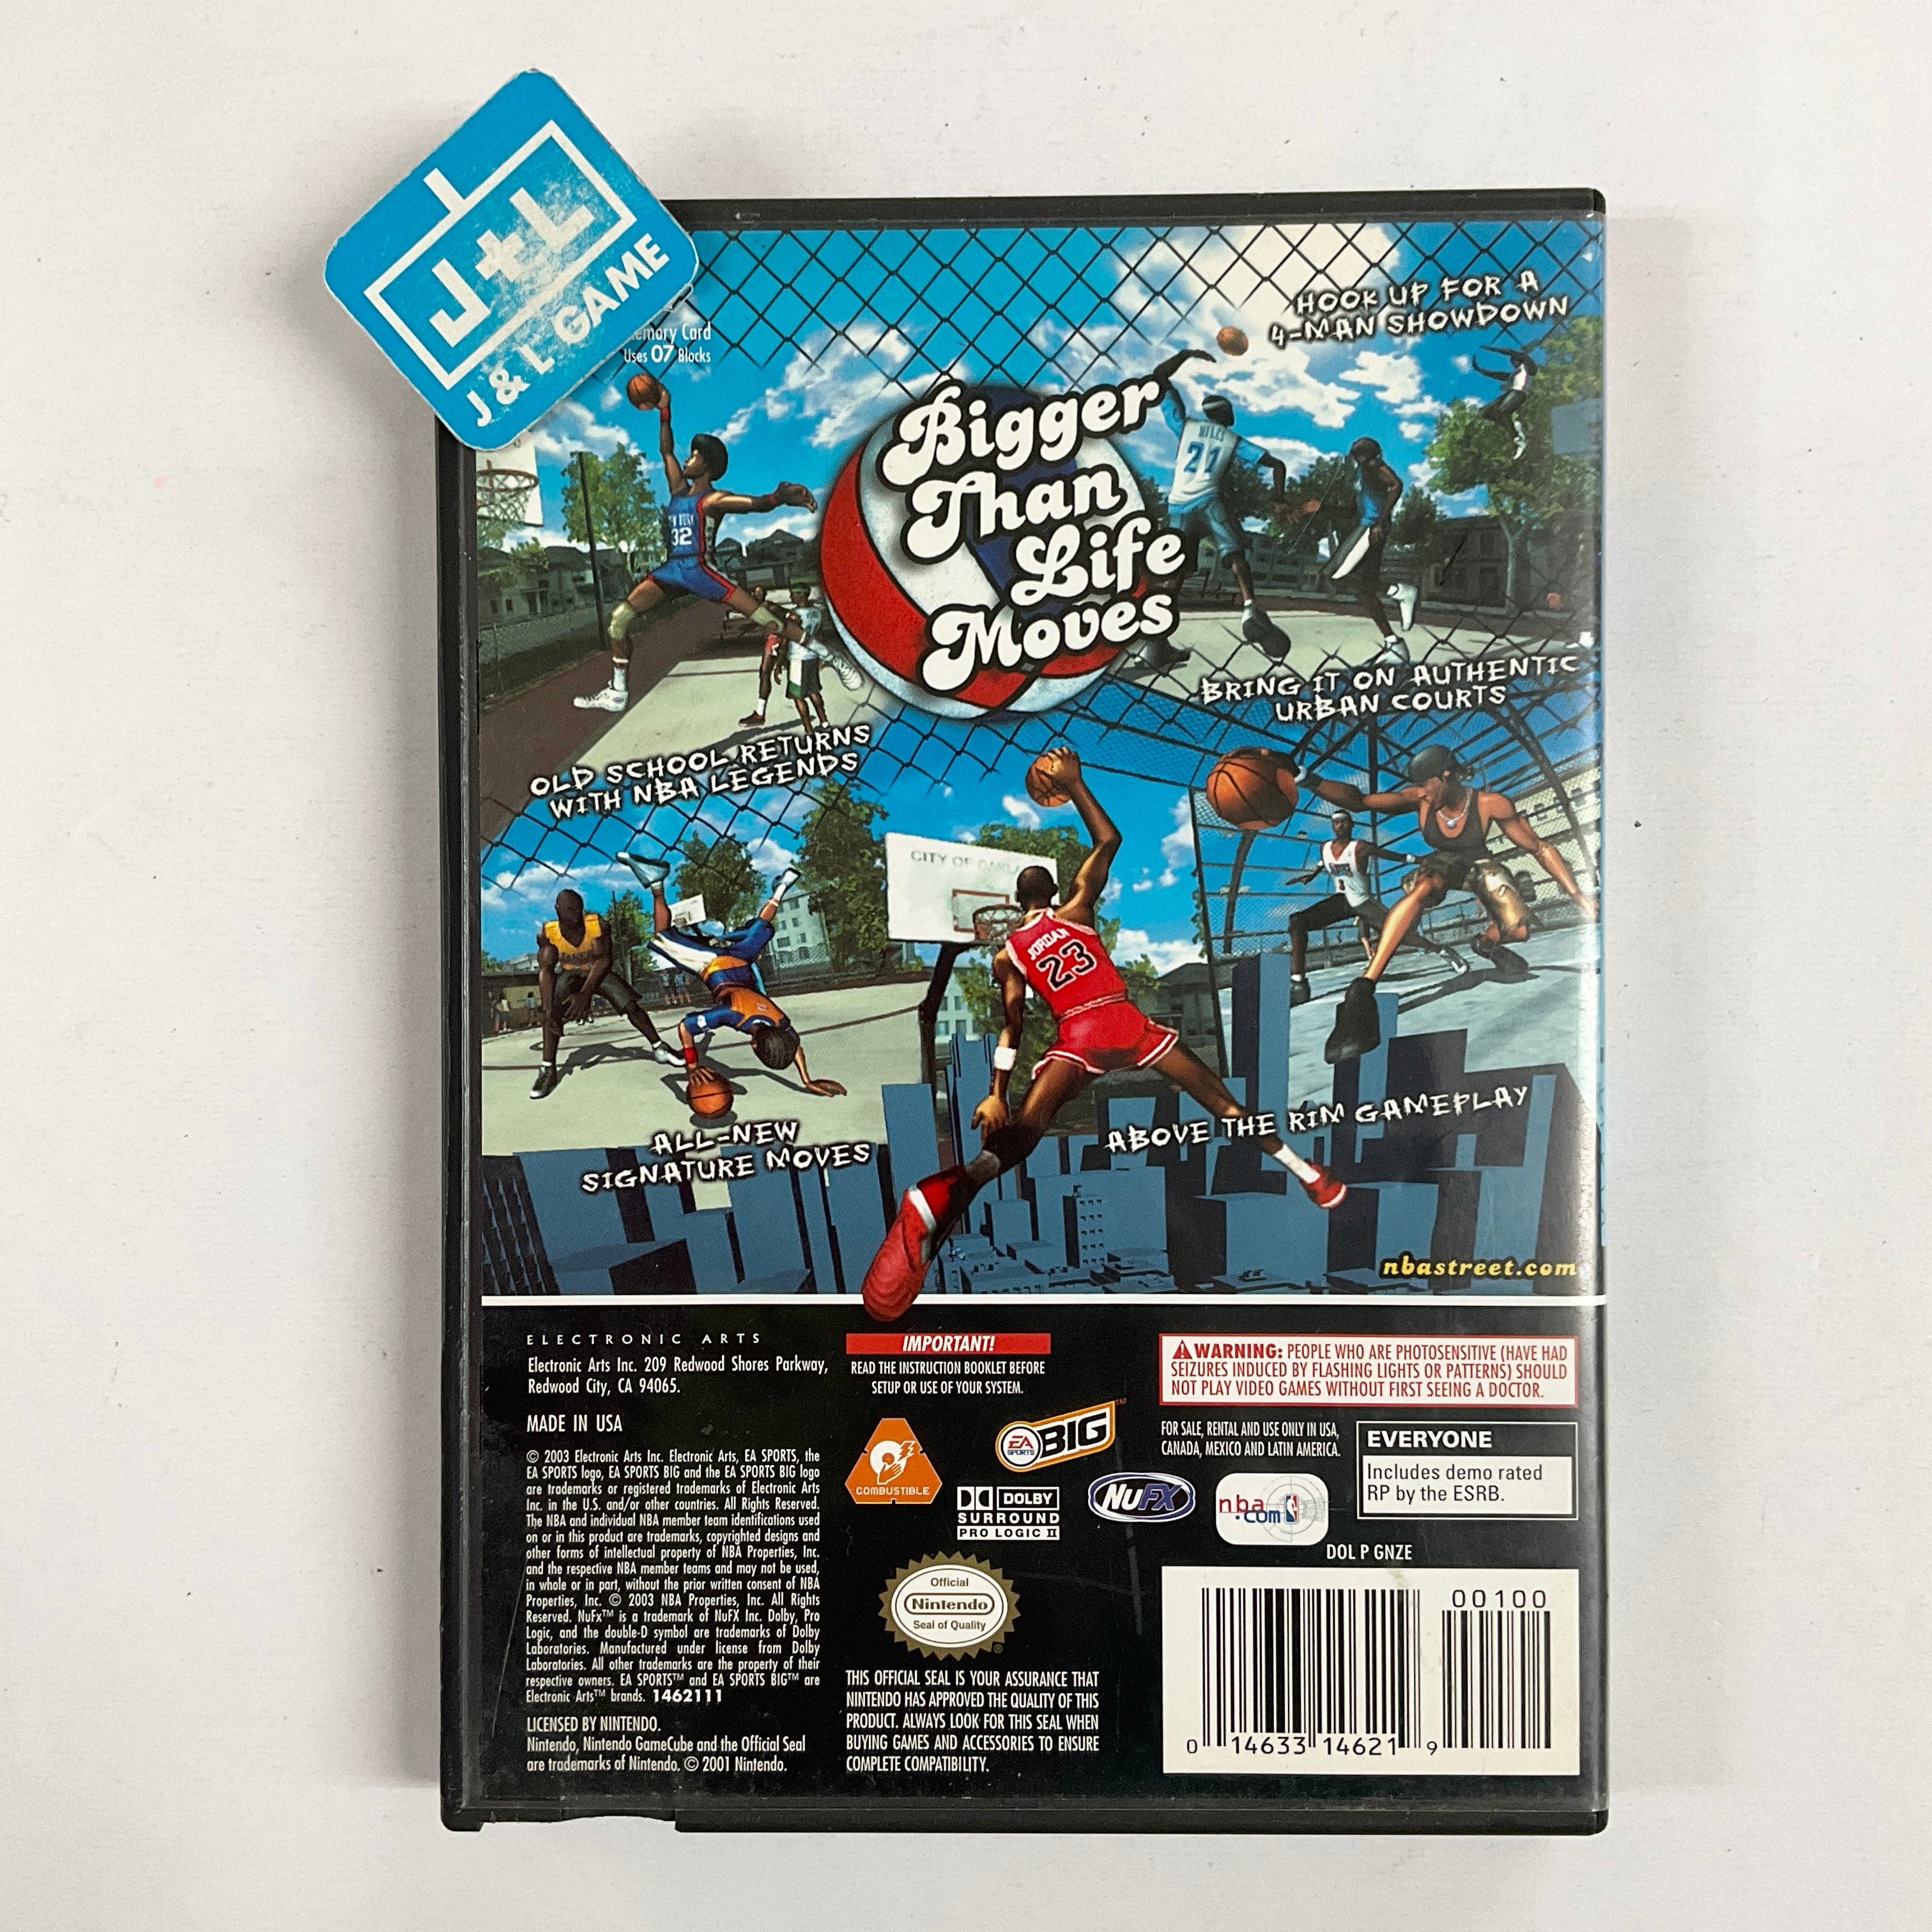 NBA Street Vol. 2 - (GC) GameCube [Pre-Owned] Video Games EA Sports Big   